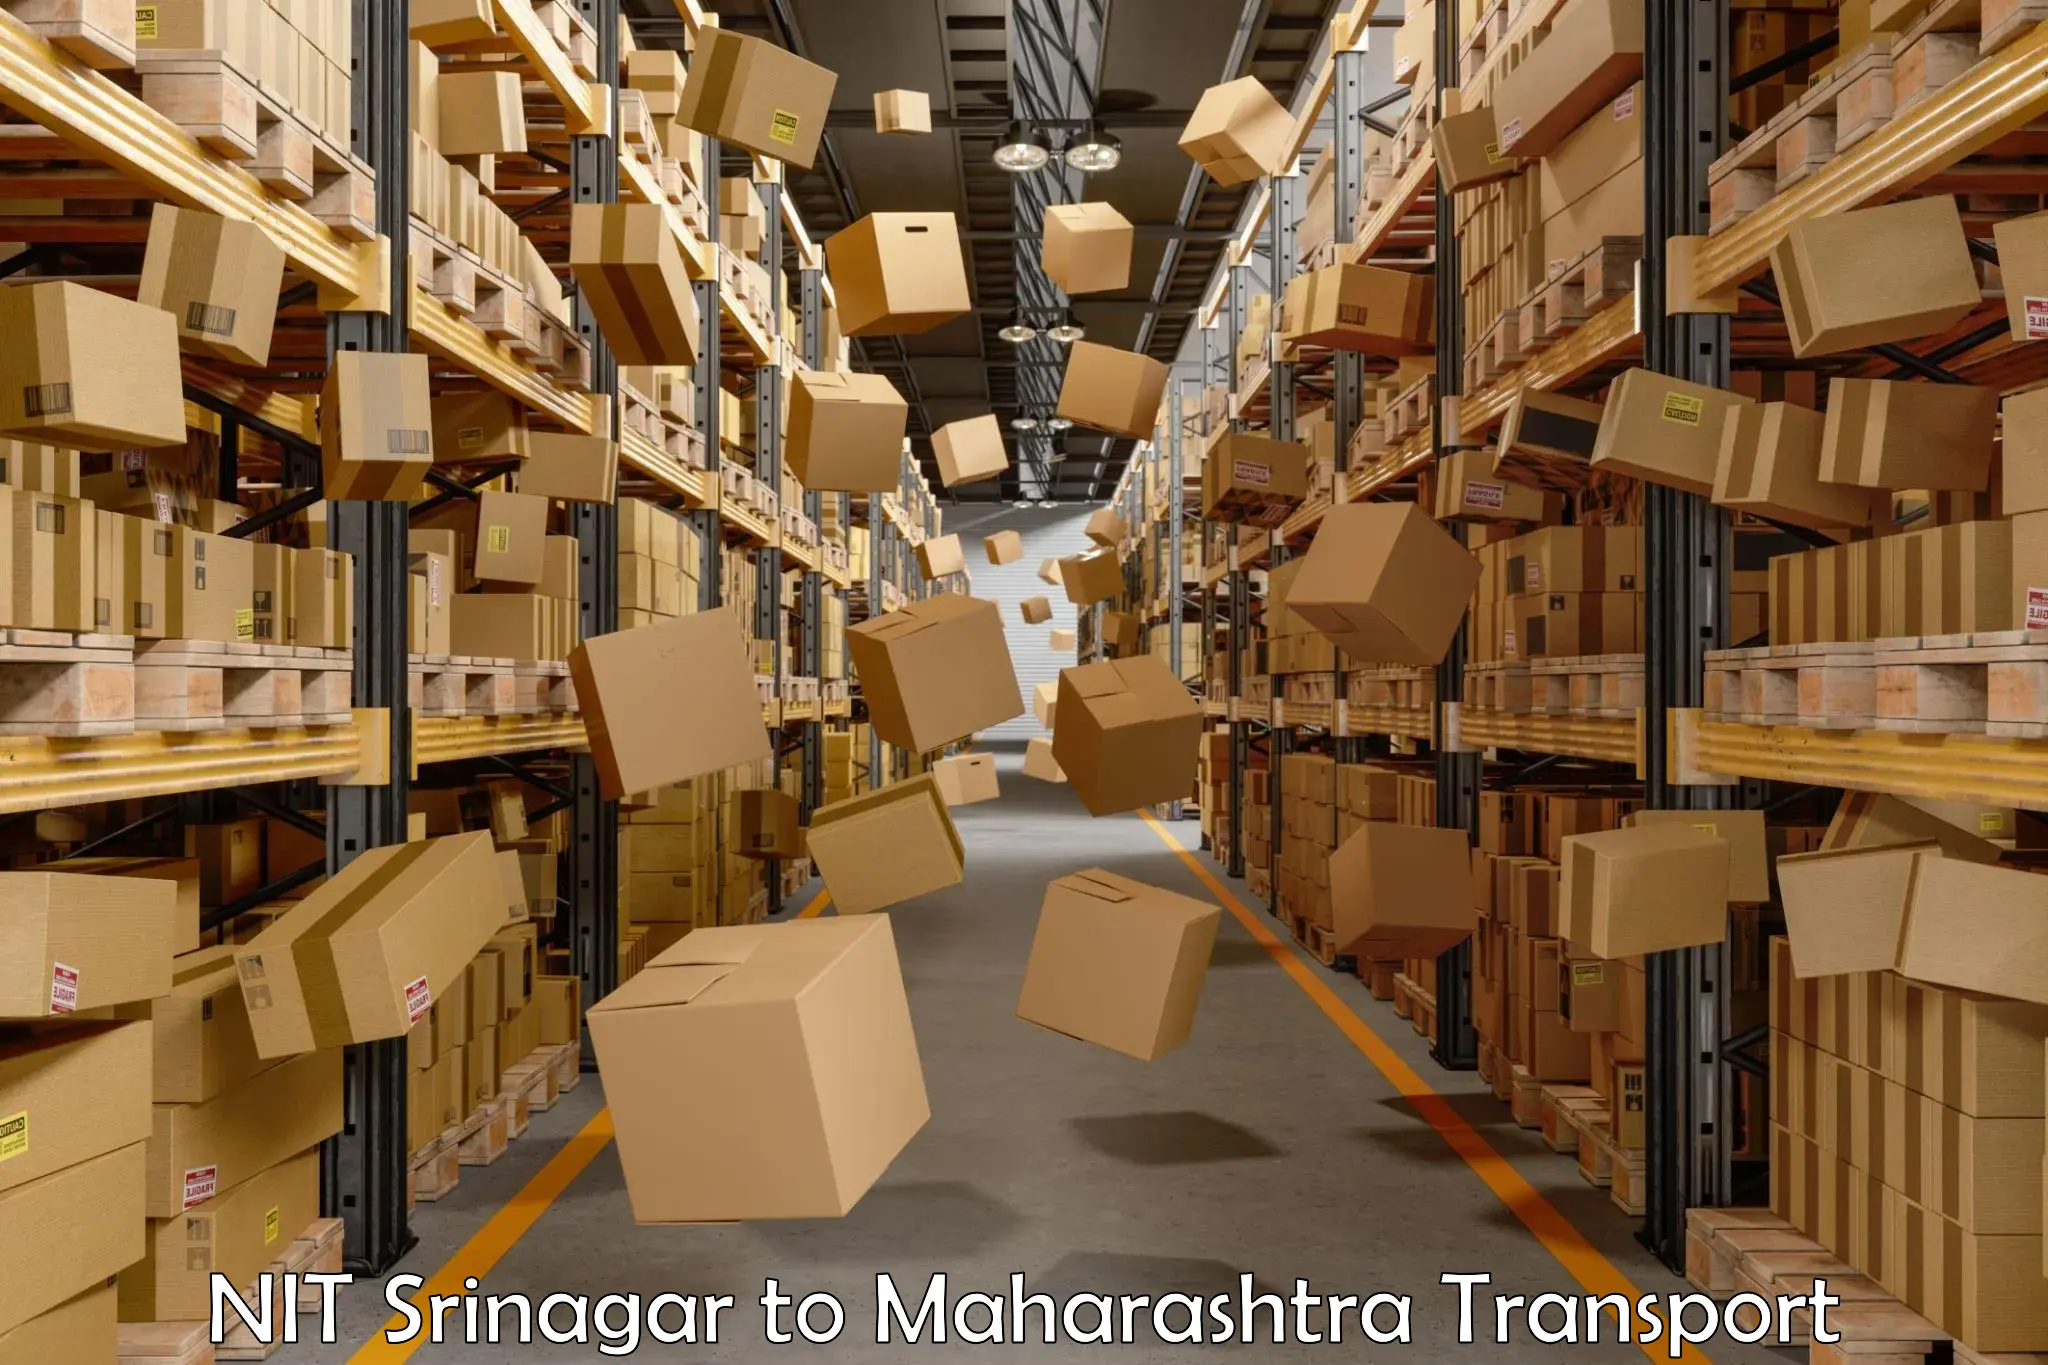 Daily transport service NIT Srinagar to Raigarh Maharashtra